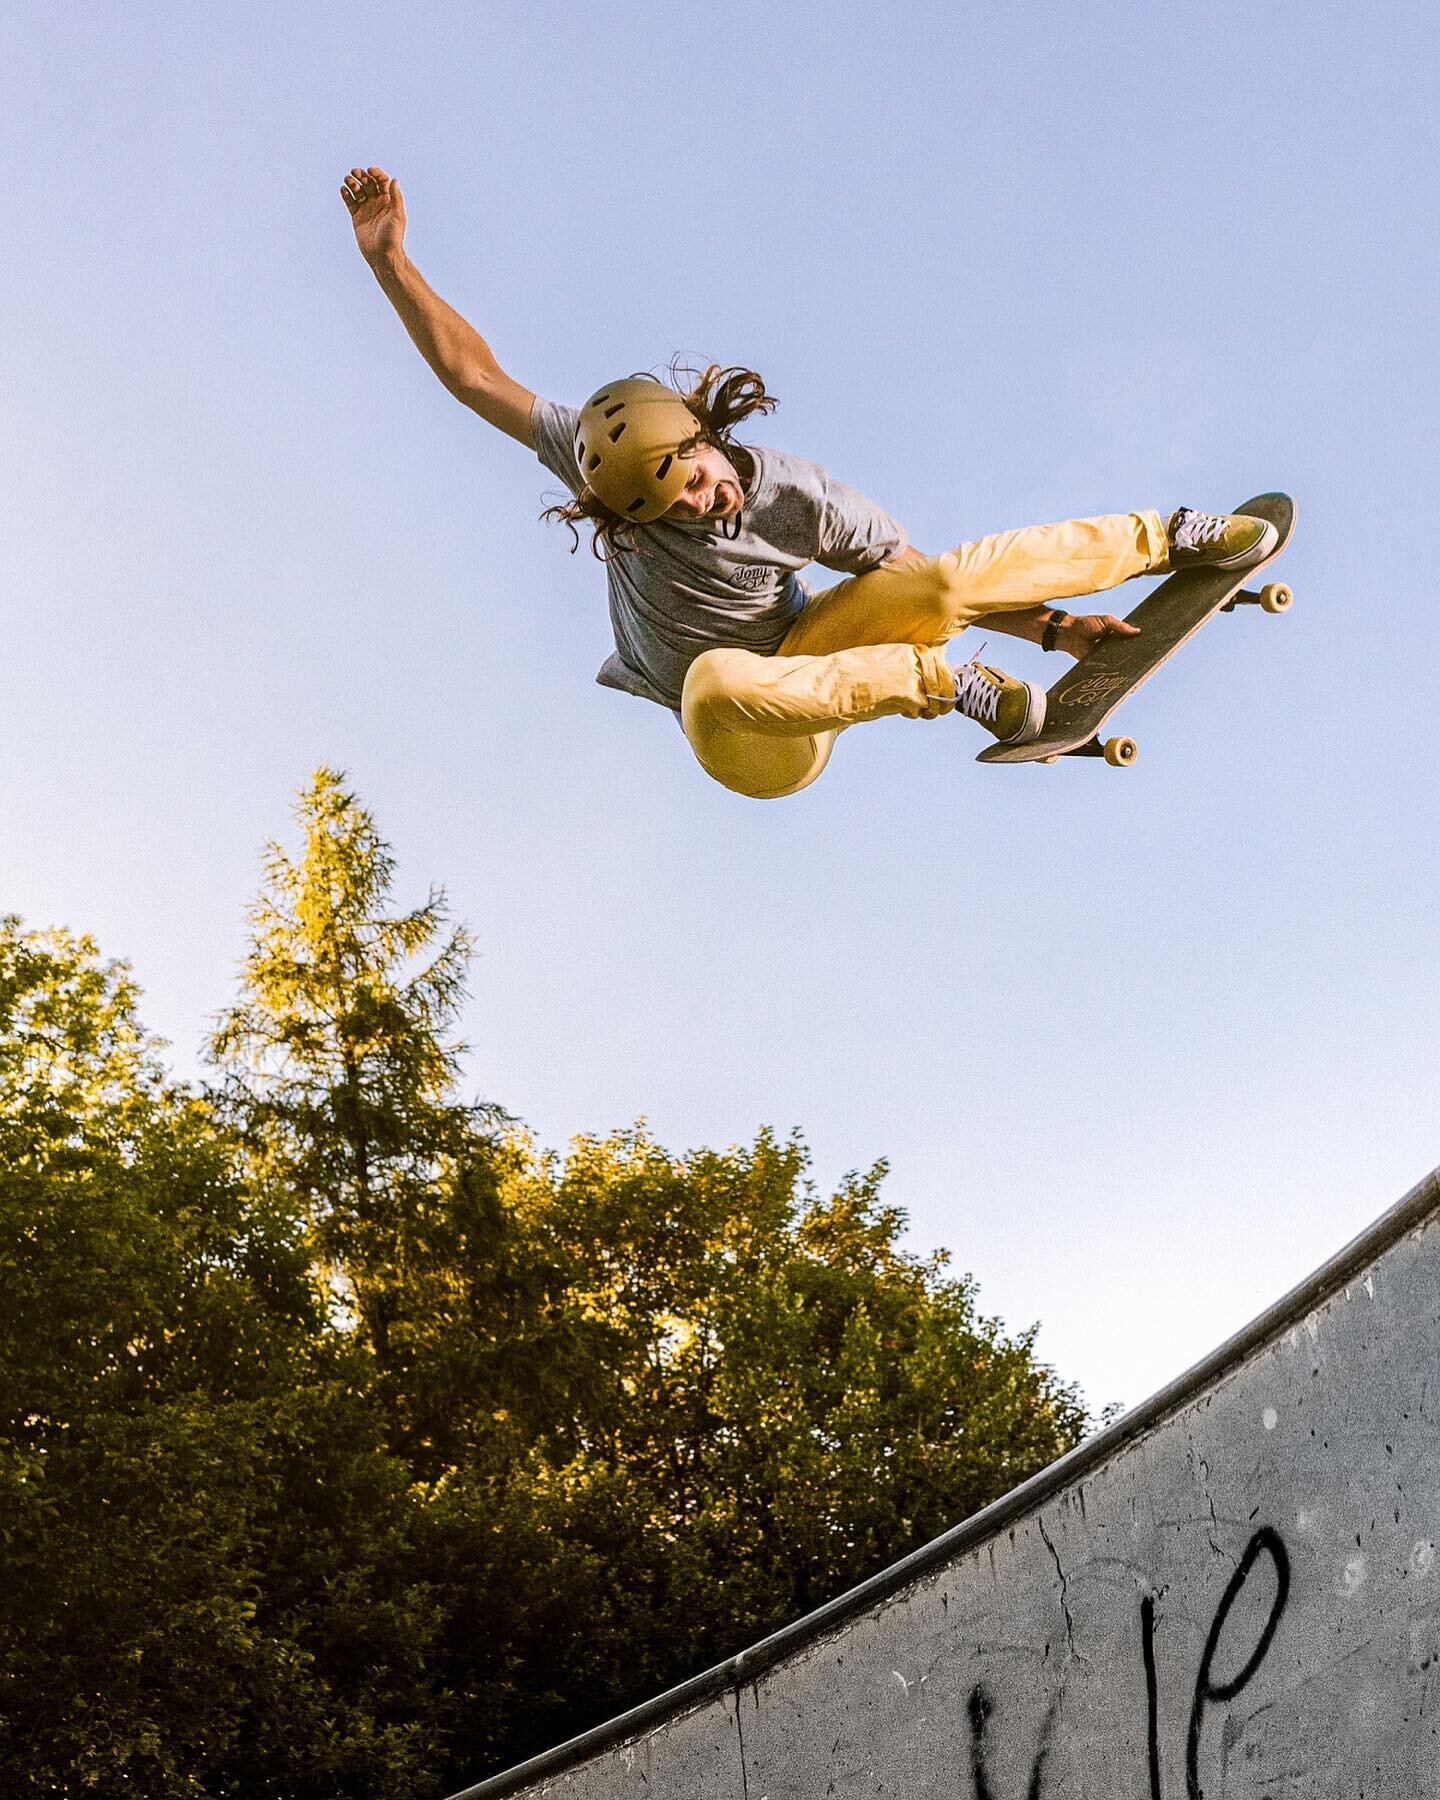 Melon Grab #Skateboarding 
📷by @graeme.fordham